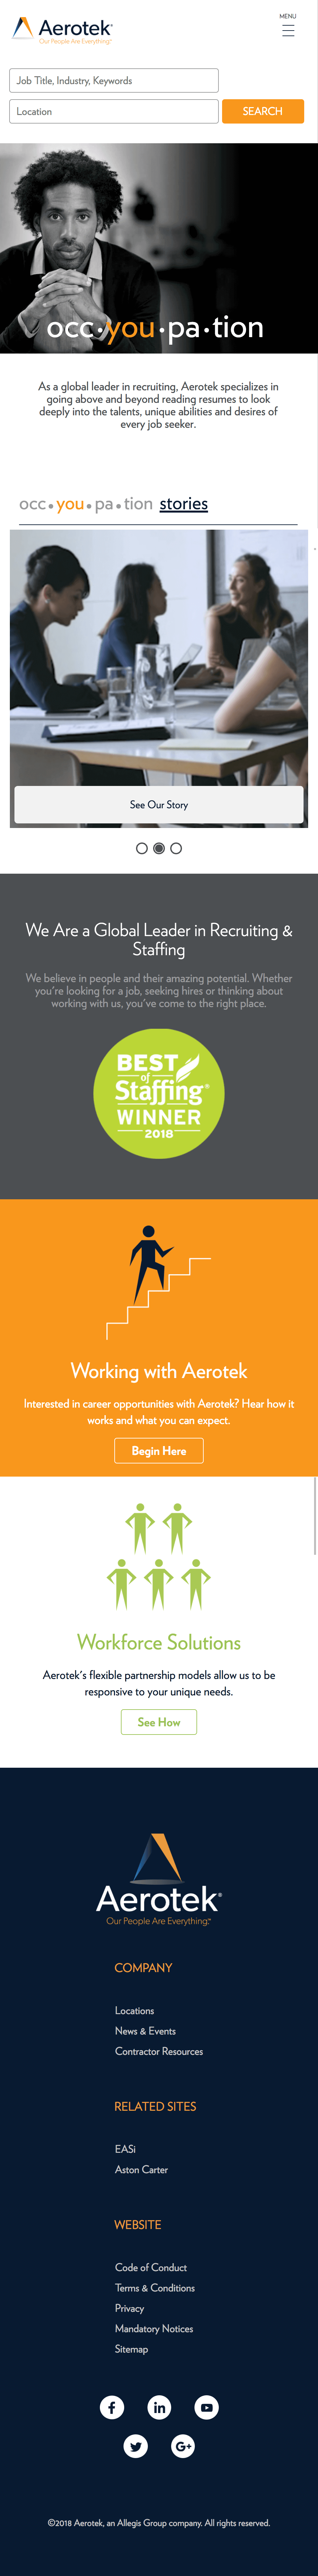 aerotek-2018-04-01-18_46_53